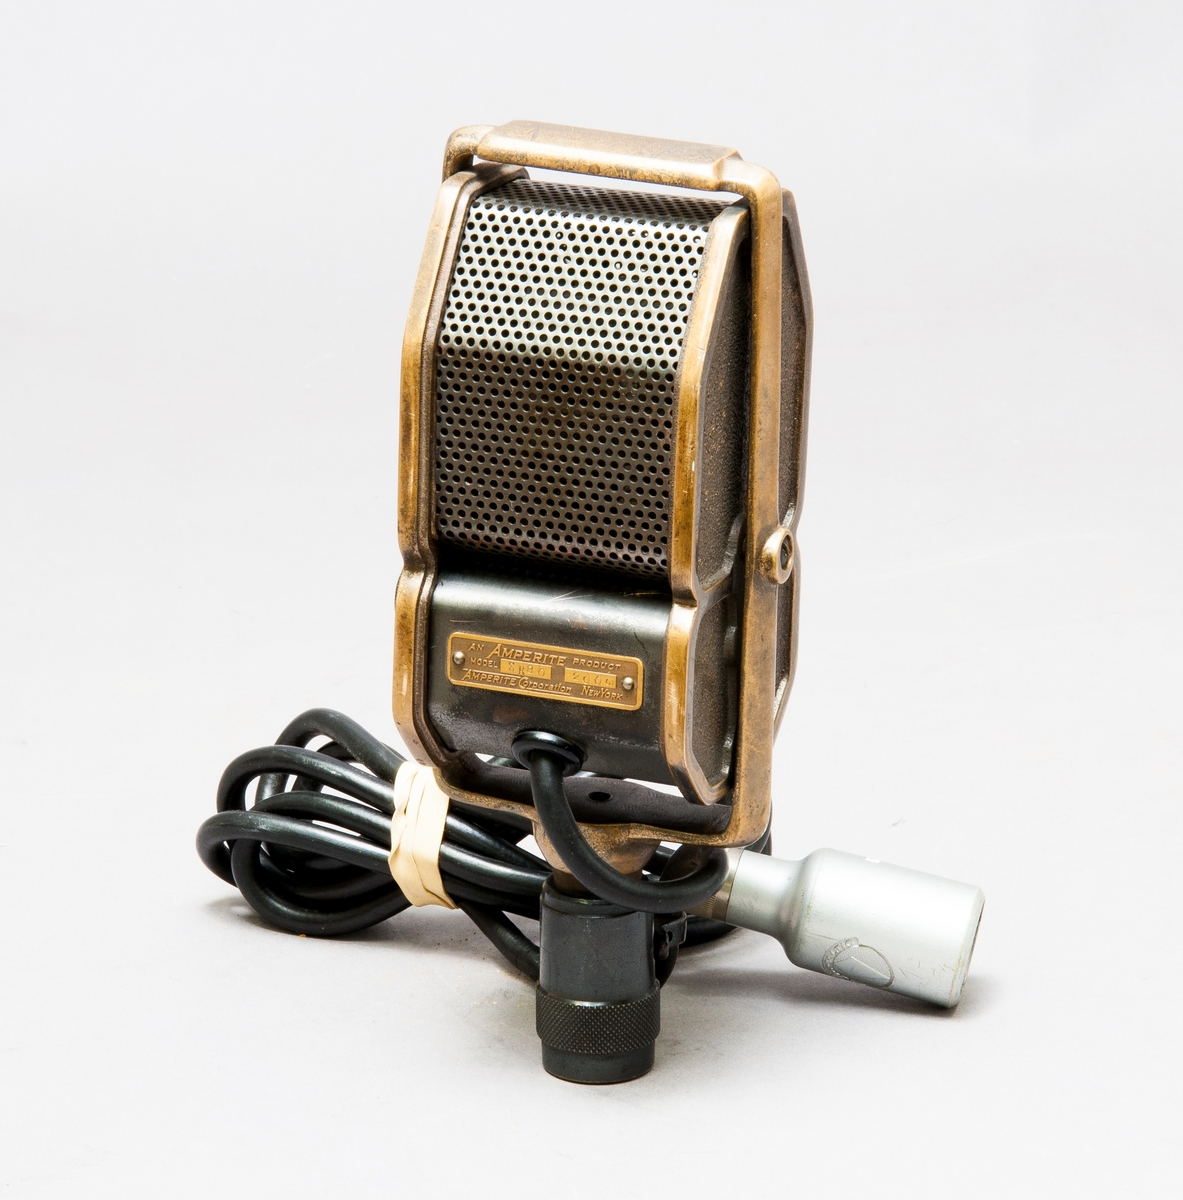 Mikrofon märkt: " An Amperite product model SR80, 200W, Amerite corporation New York"